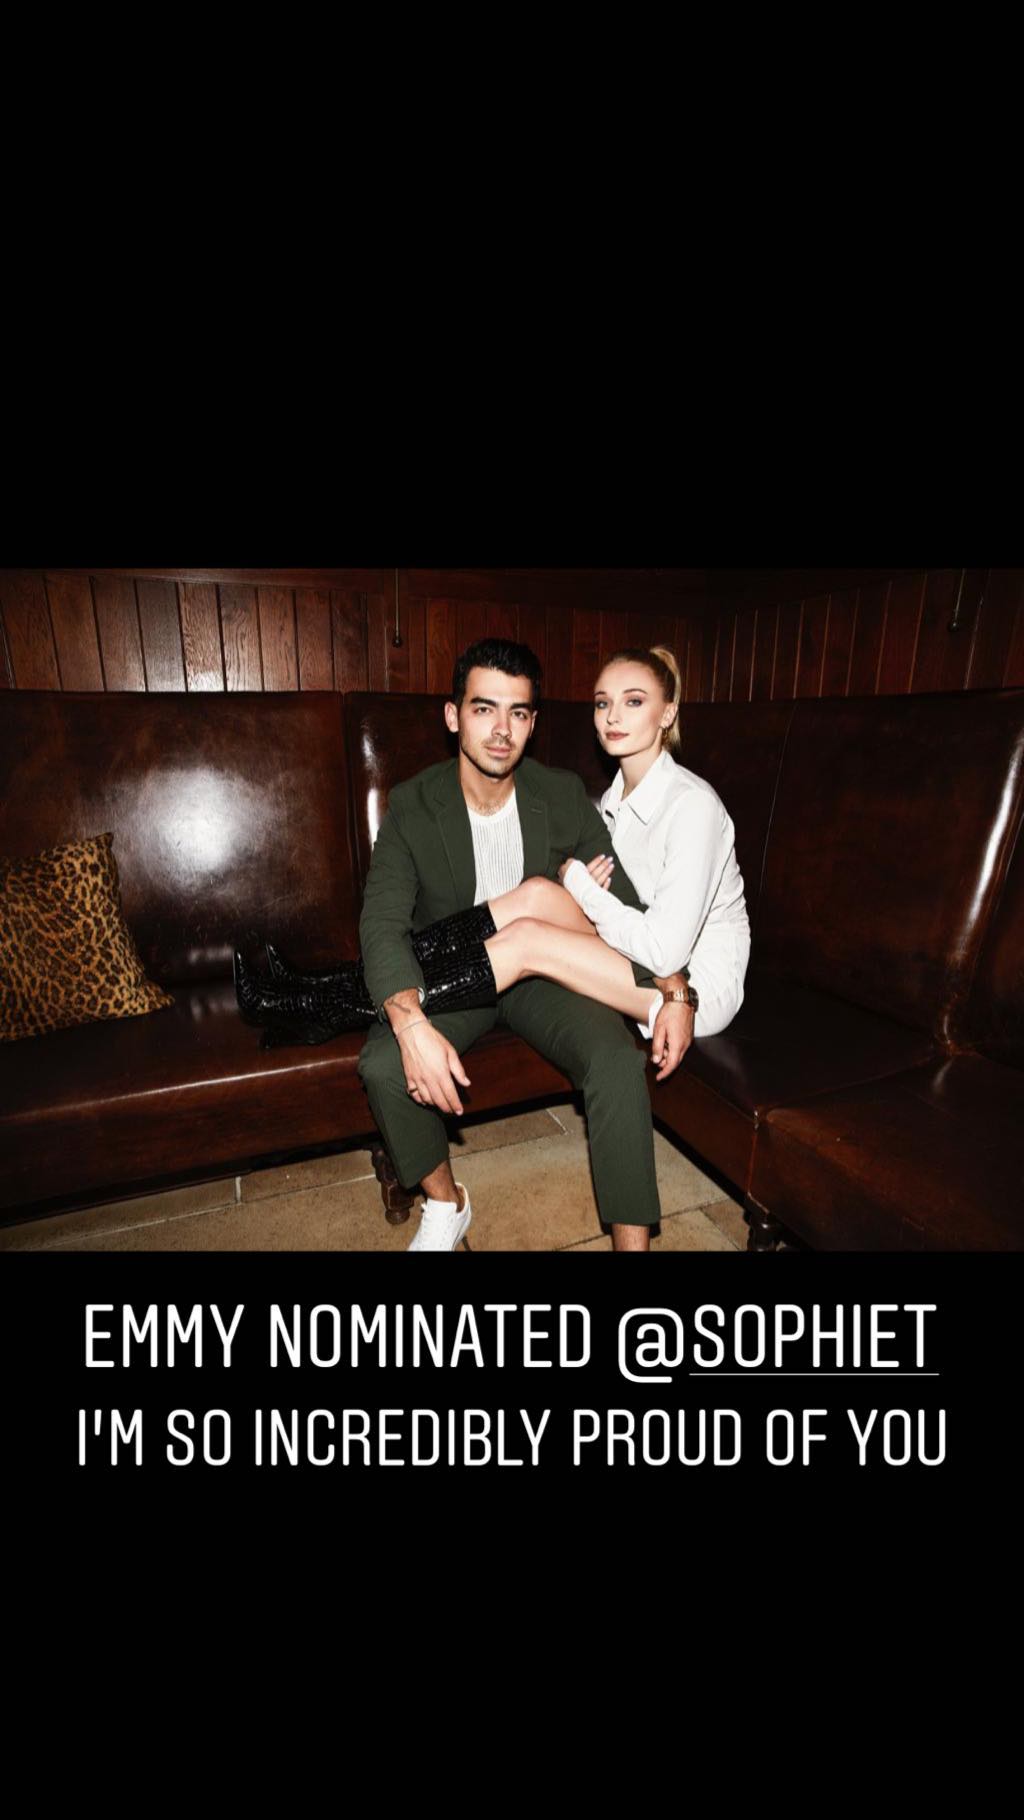 Joe Jonas congratulates Sophie